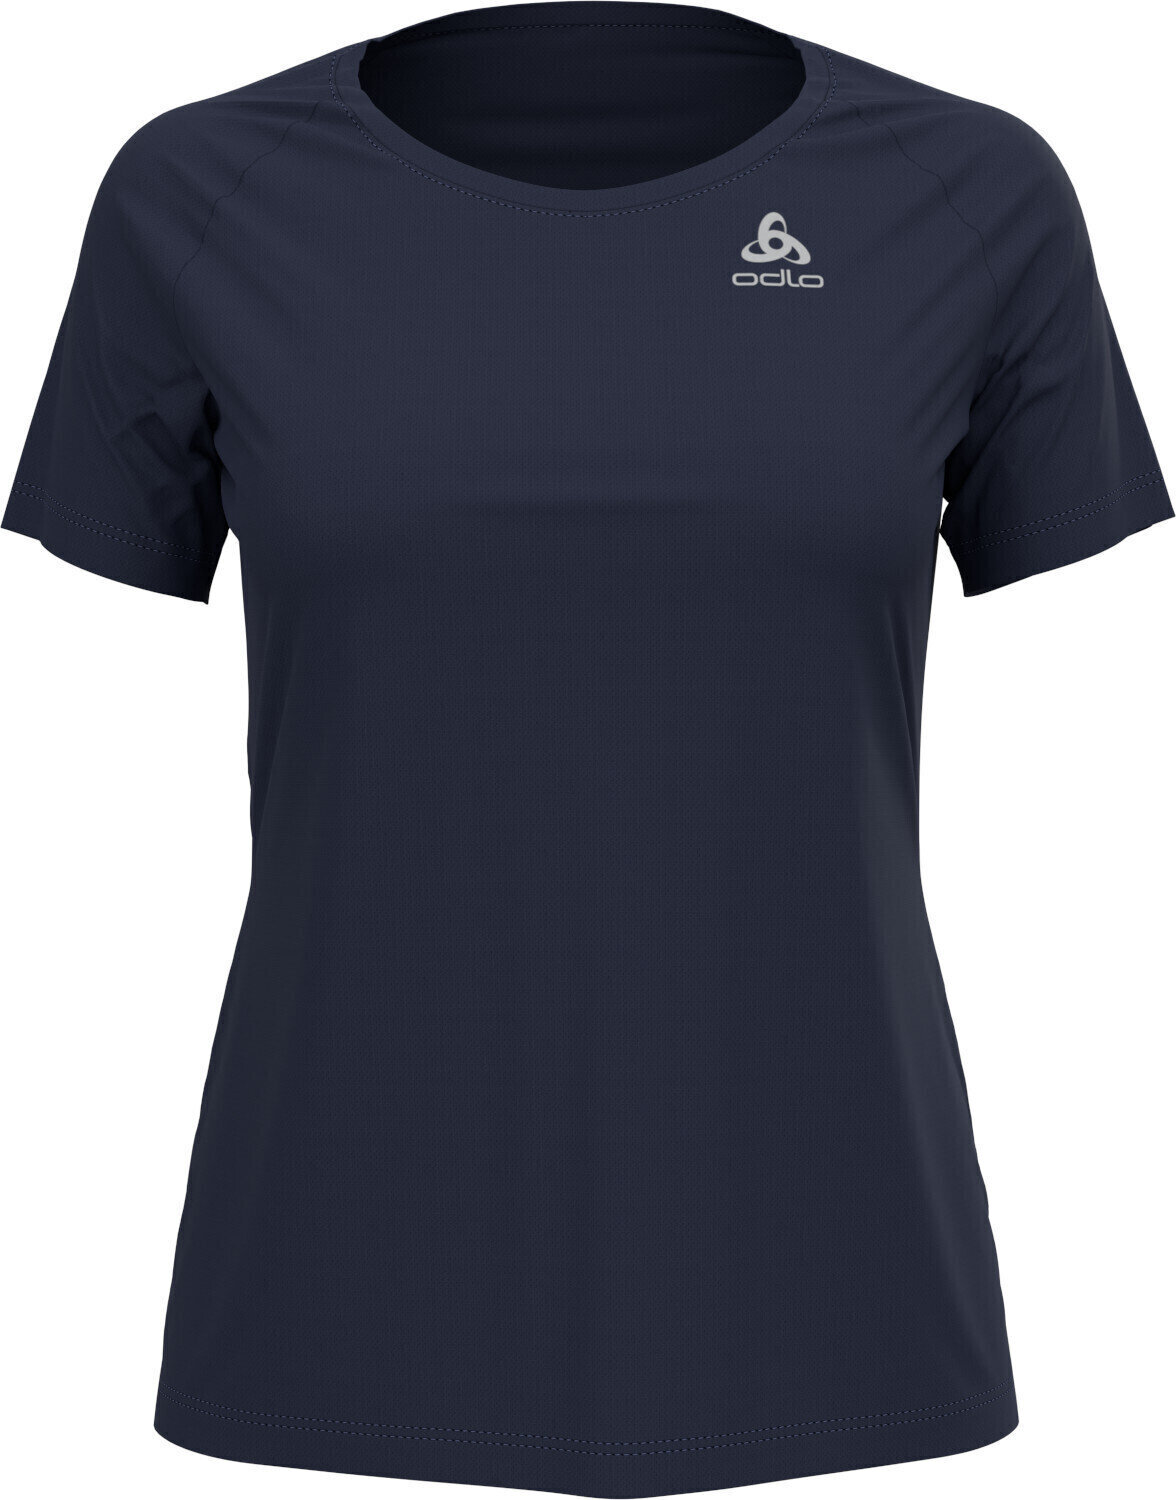 Running t-shirt with short sleeves
 Odlo Element Light T-Shirt Diving Navy S Running t-shirt with short sleeves